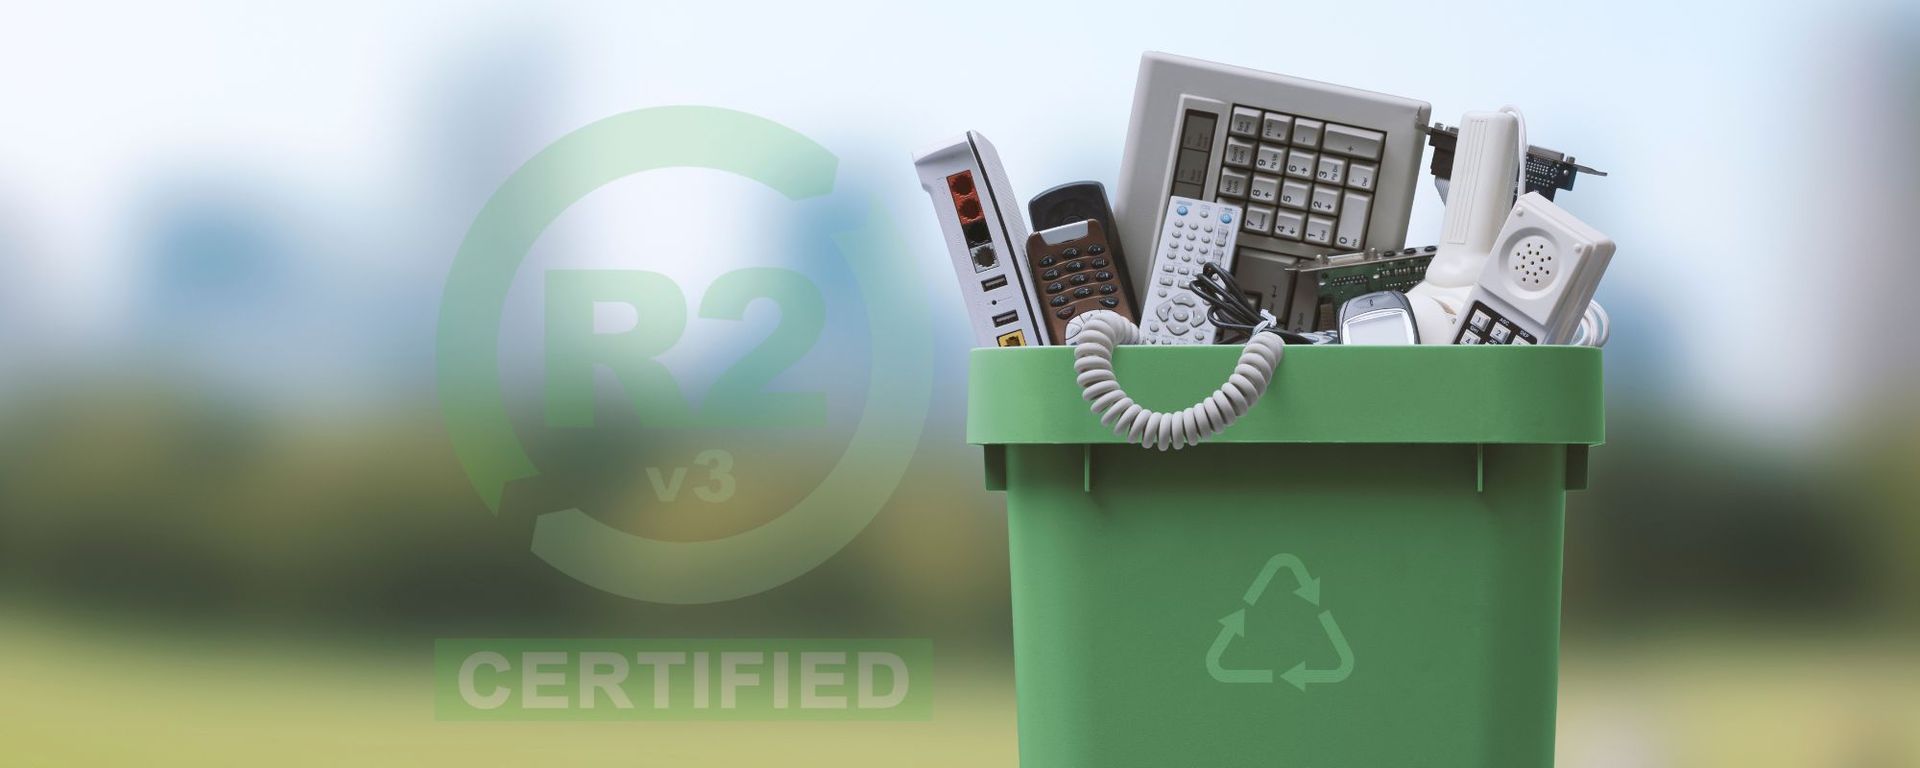 BioPharma Electronic Waste Disposal to Meet ESG Guidelines